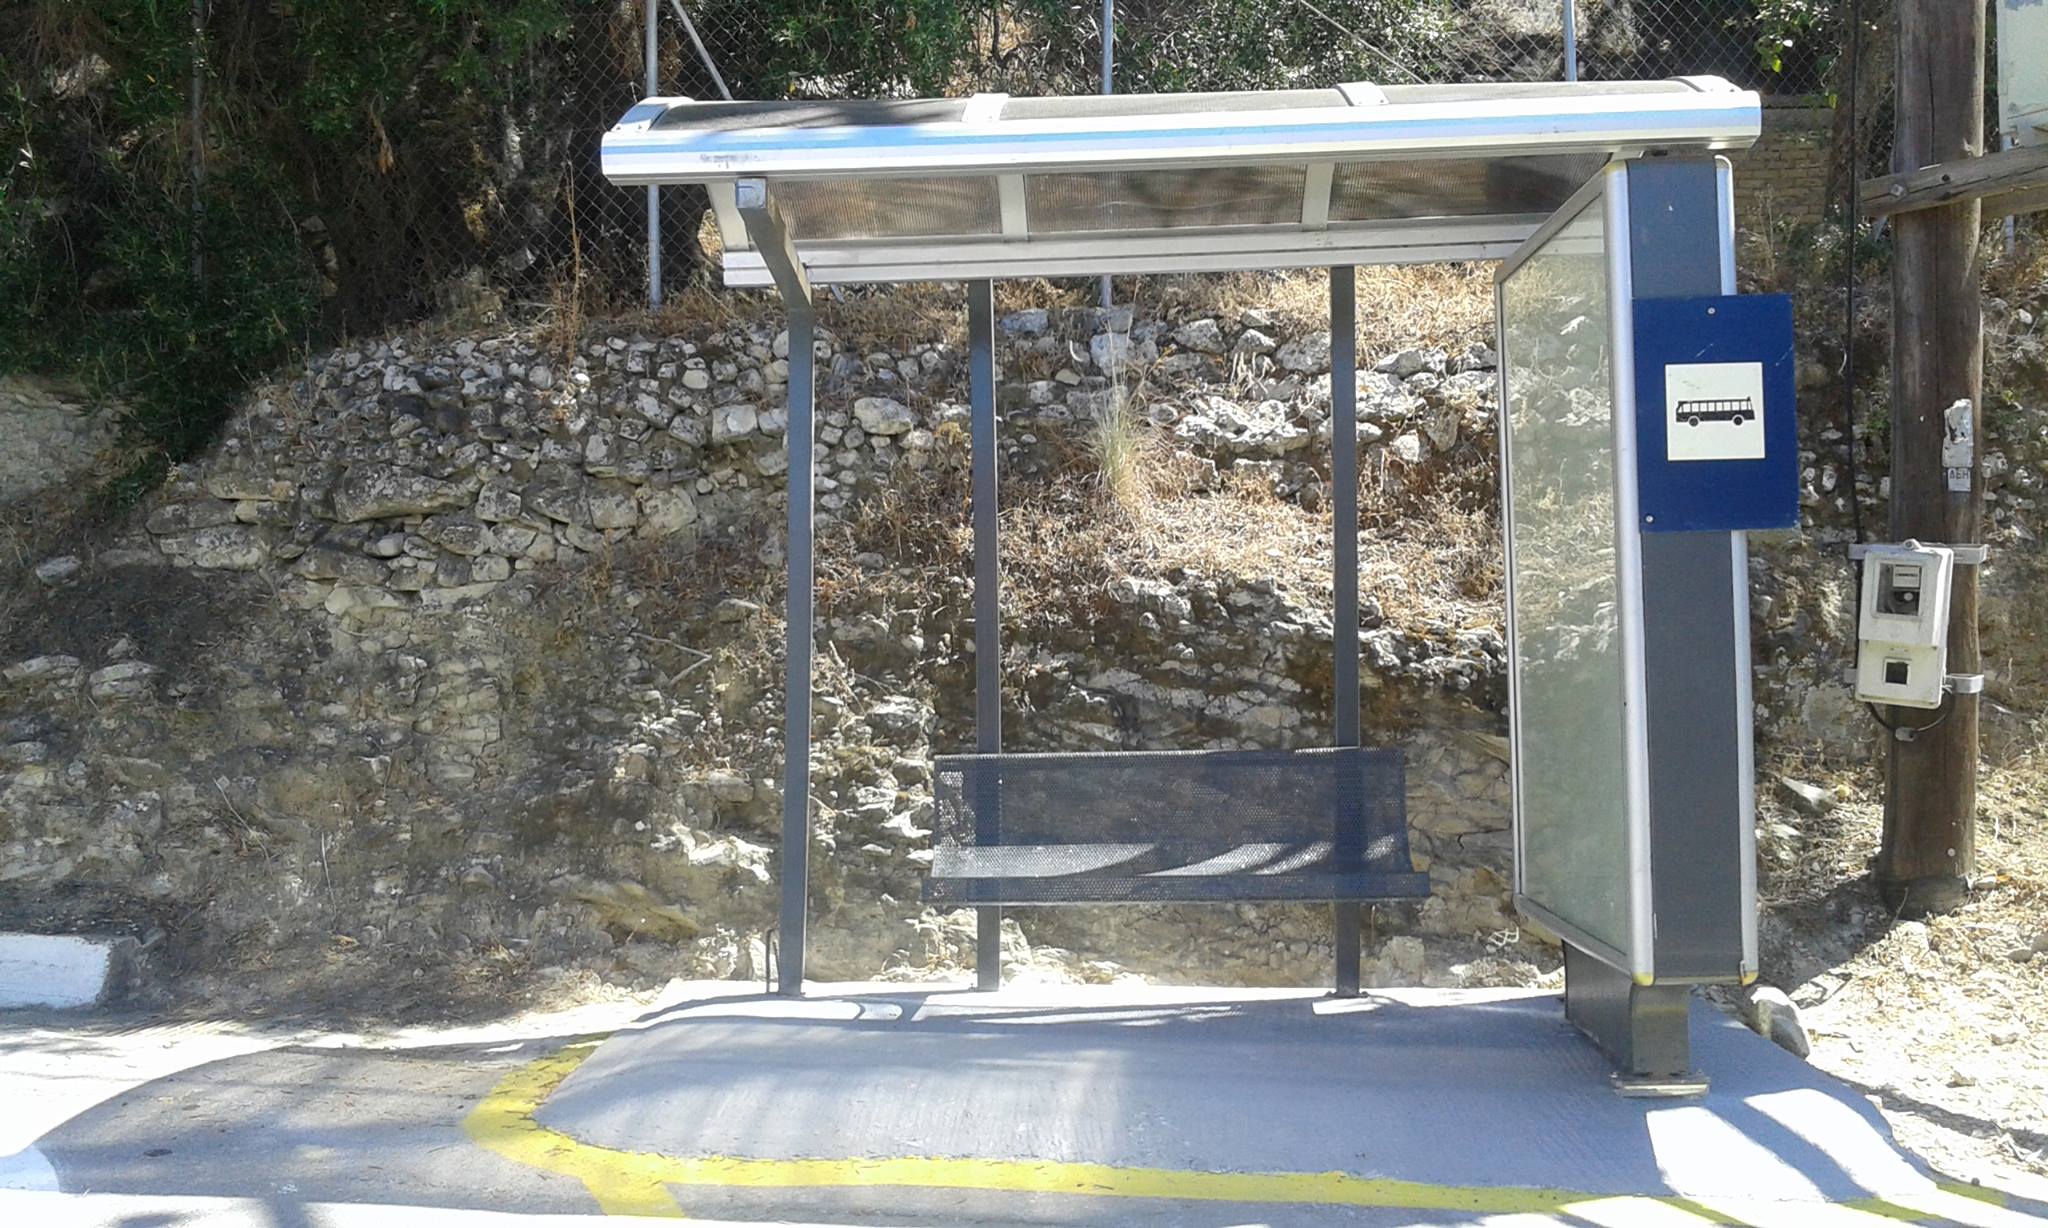 The bus stop in Pentati